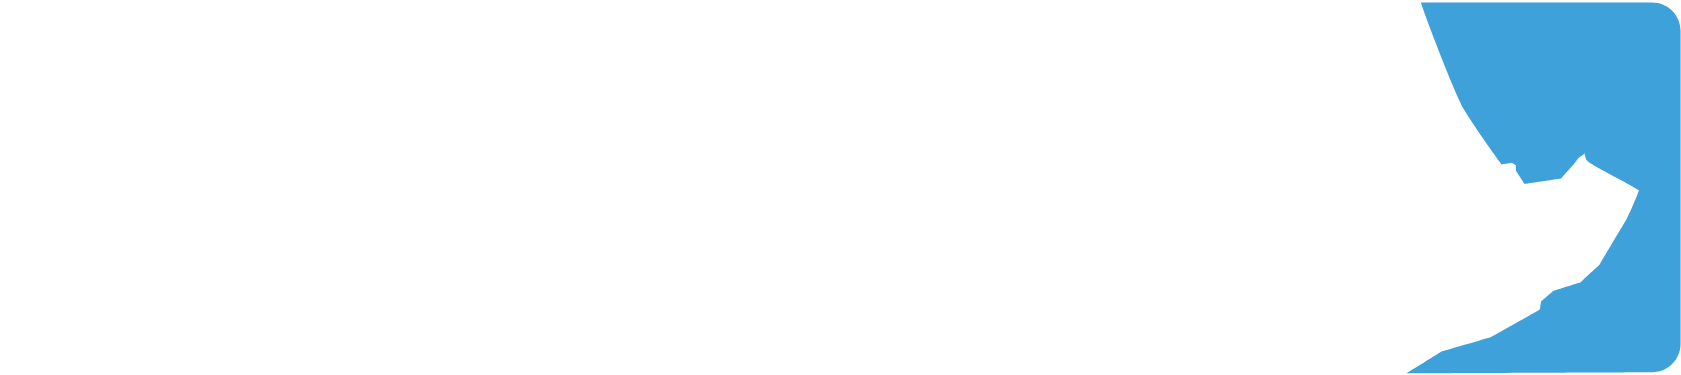 Bank AlJazira logo large for dark backgrounds (transparent PNG)